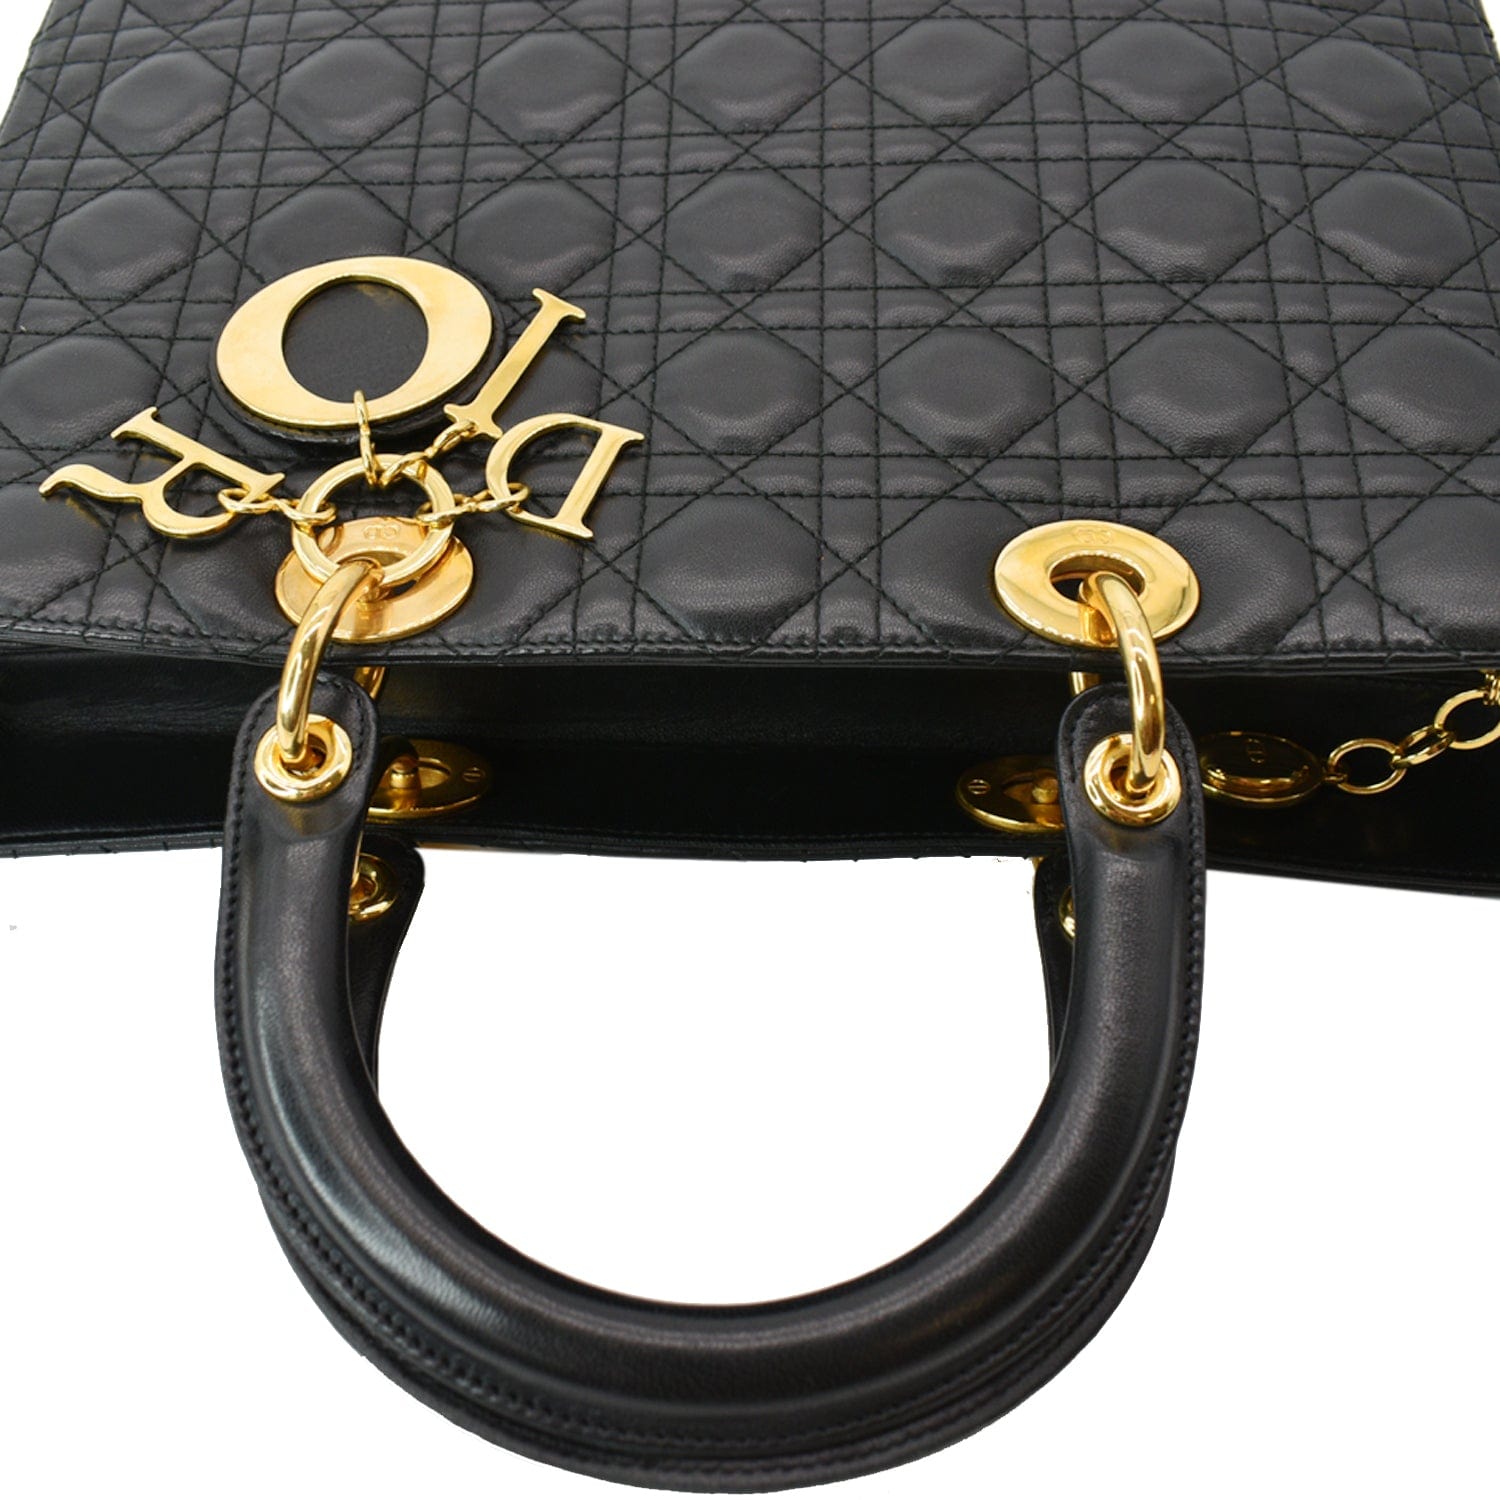 Large Lady Dior Bag Black Cannage Lambskin